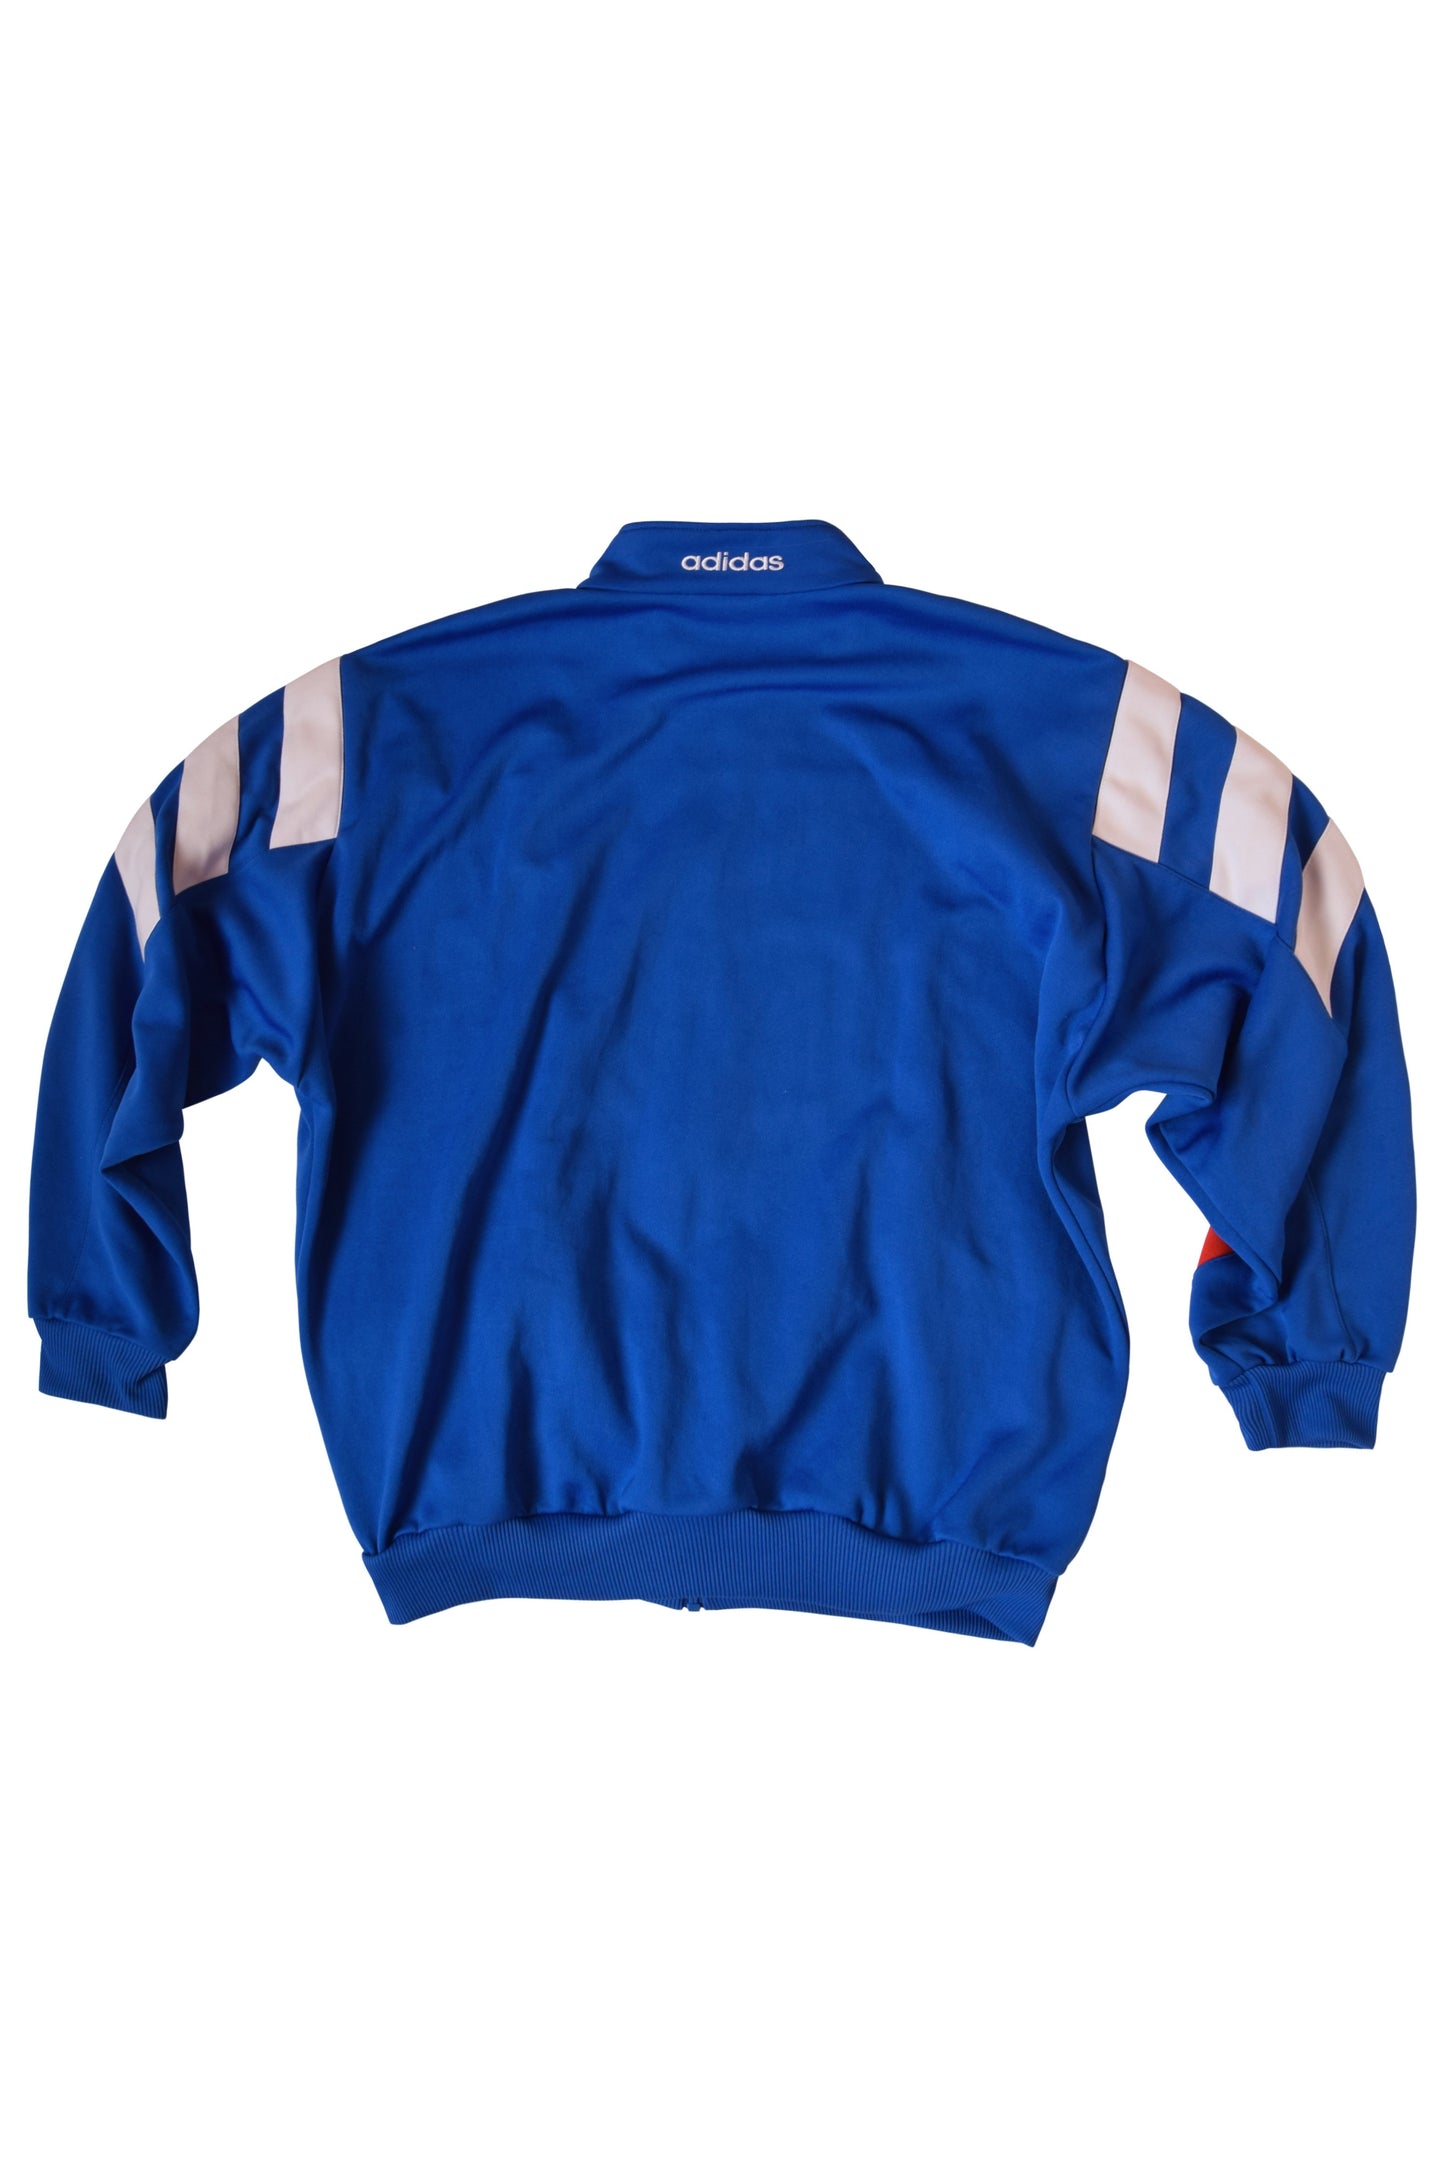 Vintage Bayern Munchen Adidas Jacket Track Top 1995-1996 Red blue Size L-XL